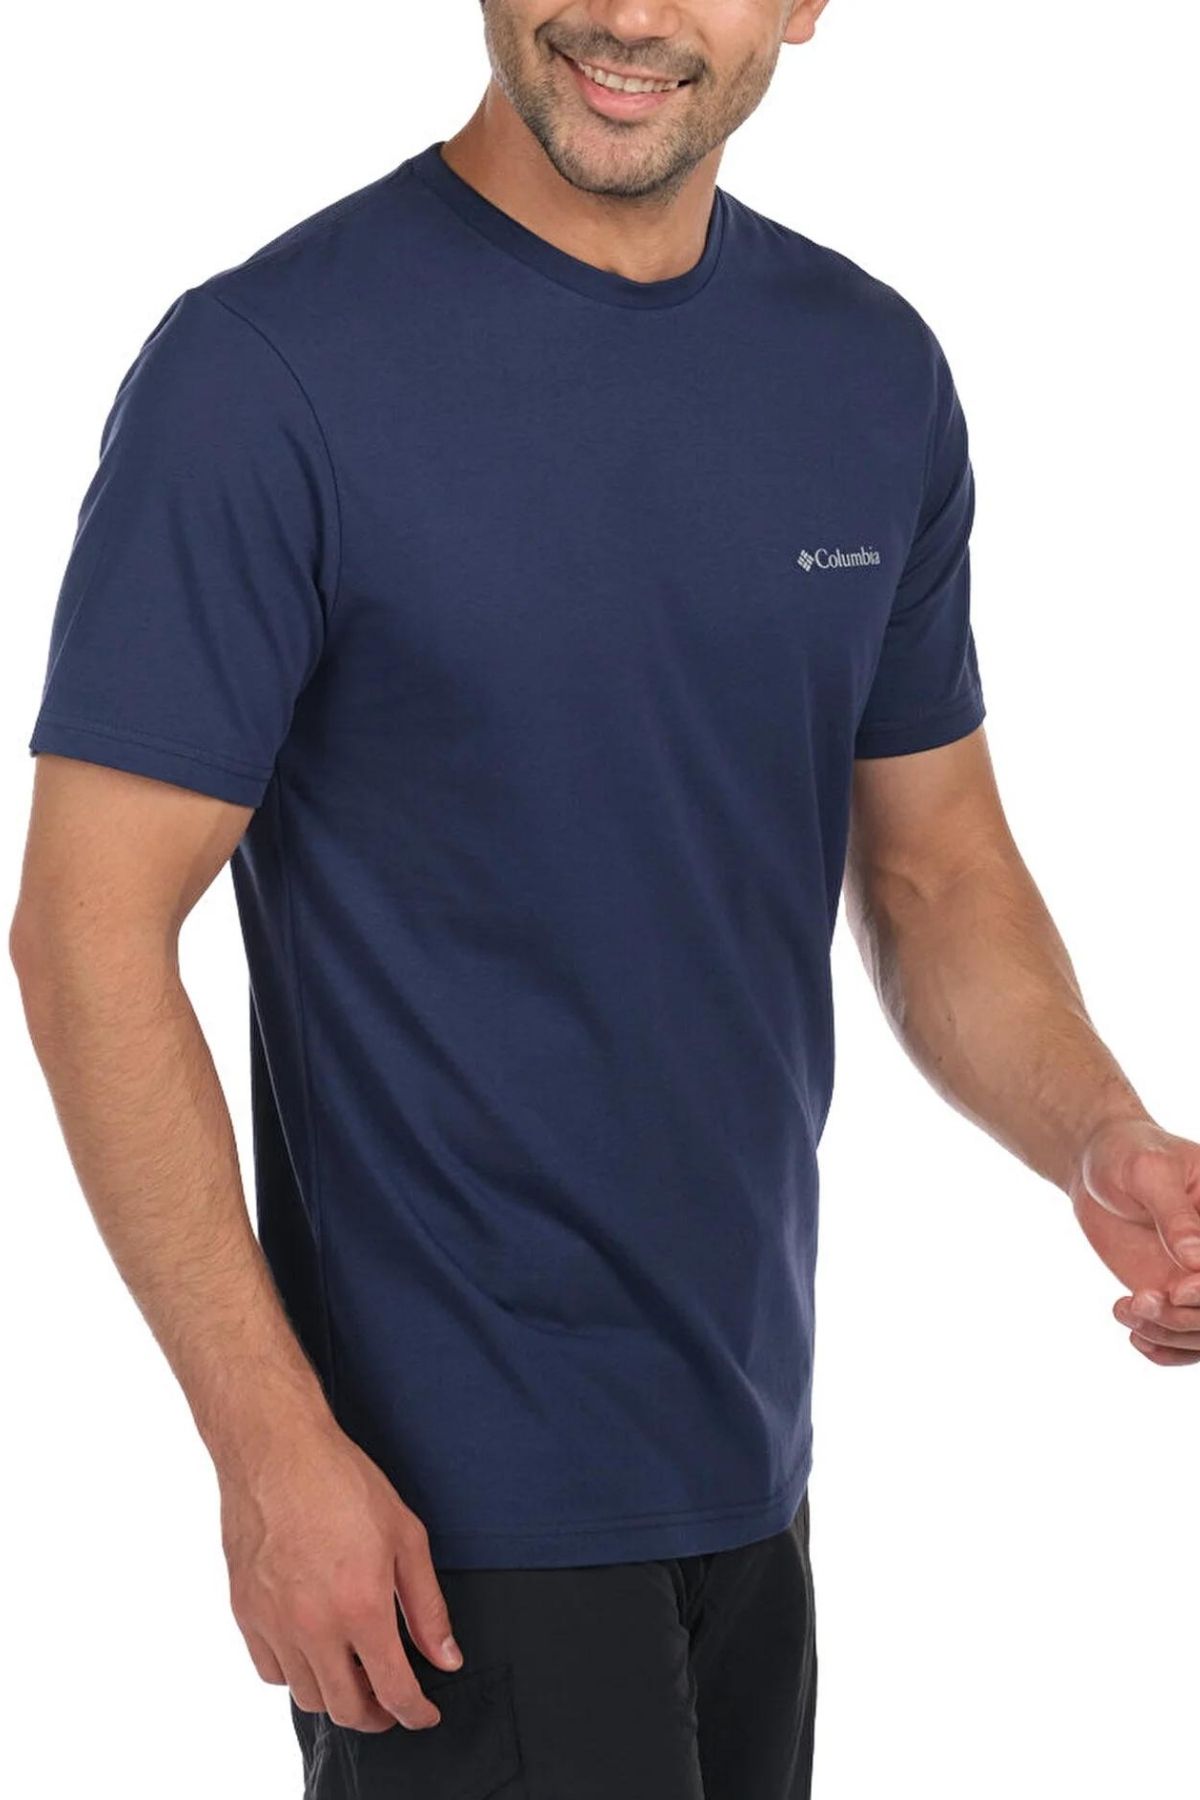 Columbia Erkek Mavi T-shirt 9110010464-464